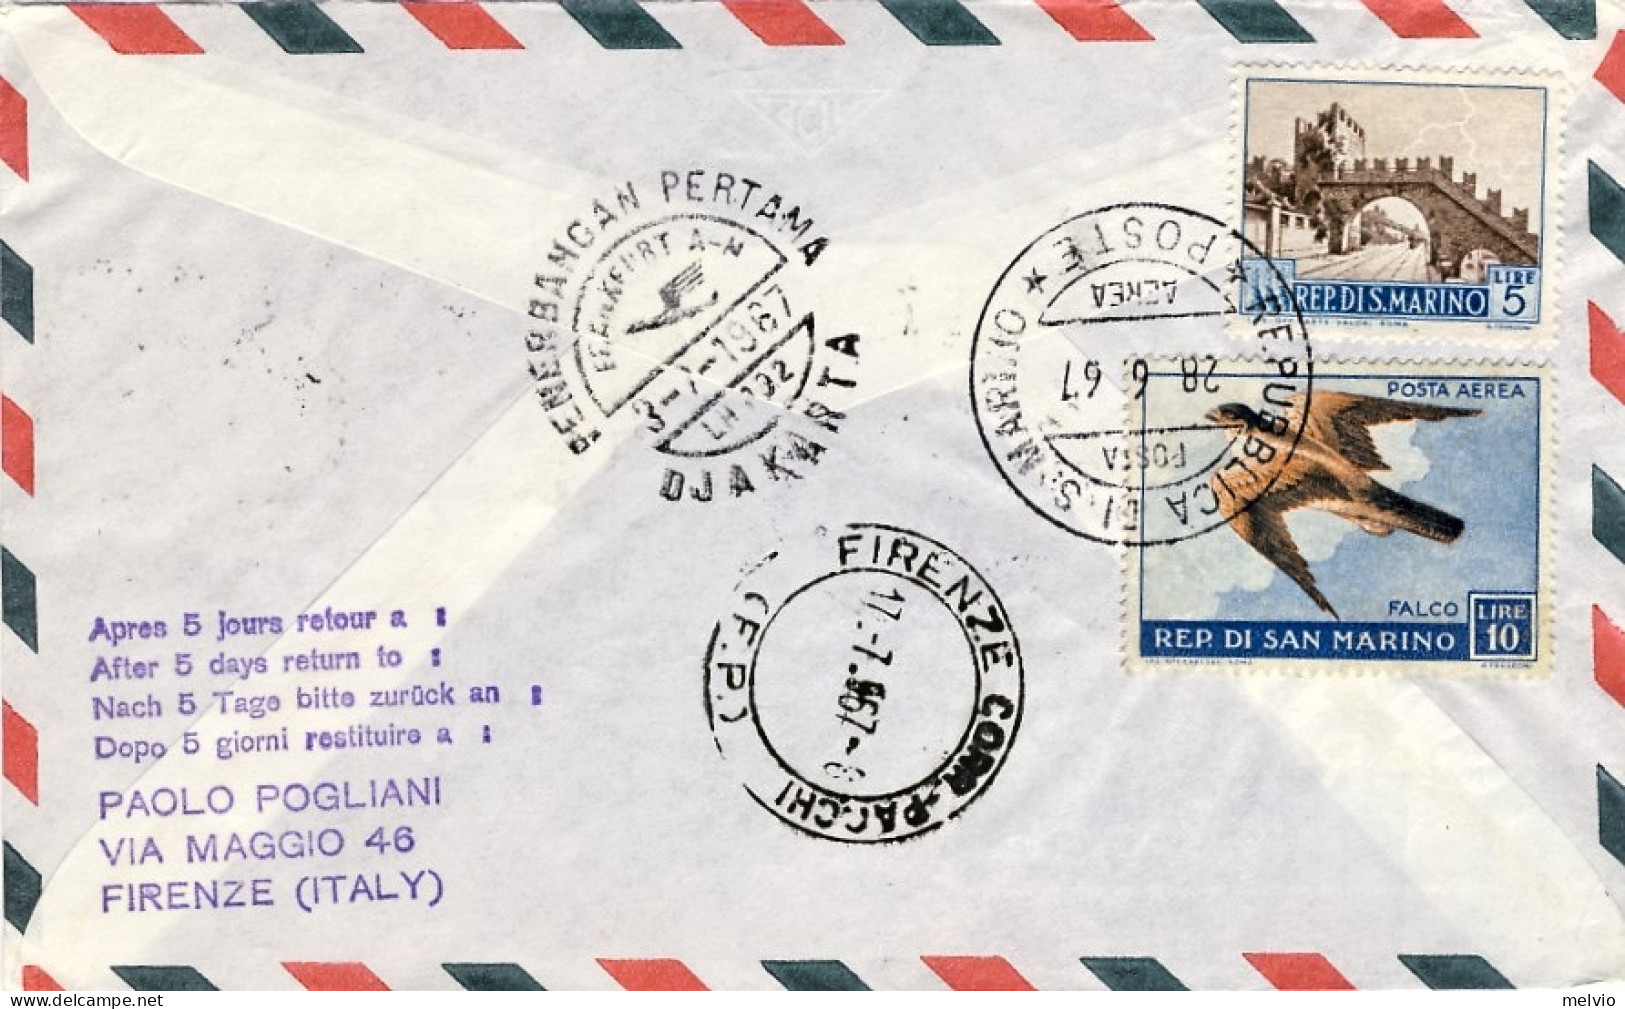 San Marino-1967 I^volo Lufthansa LH 692 Francoforte-Djakarta - Luftpost